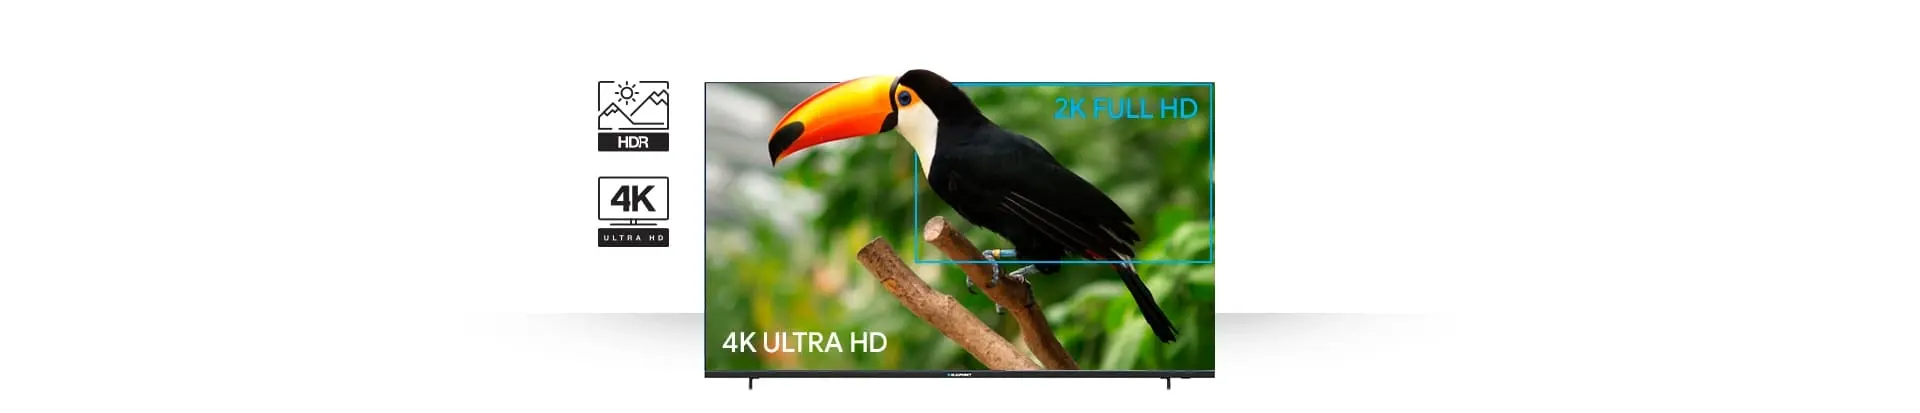 TV UHD 4K Smart TV LED Blaupunkt 65UB5000